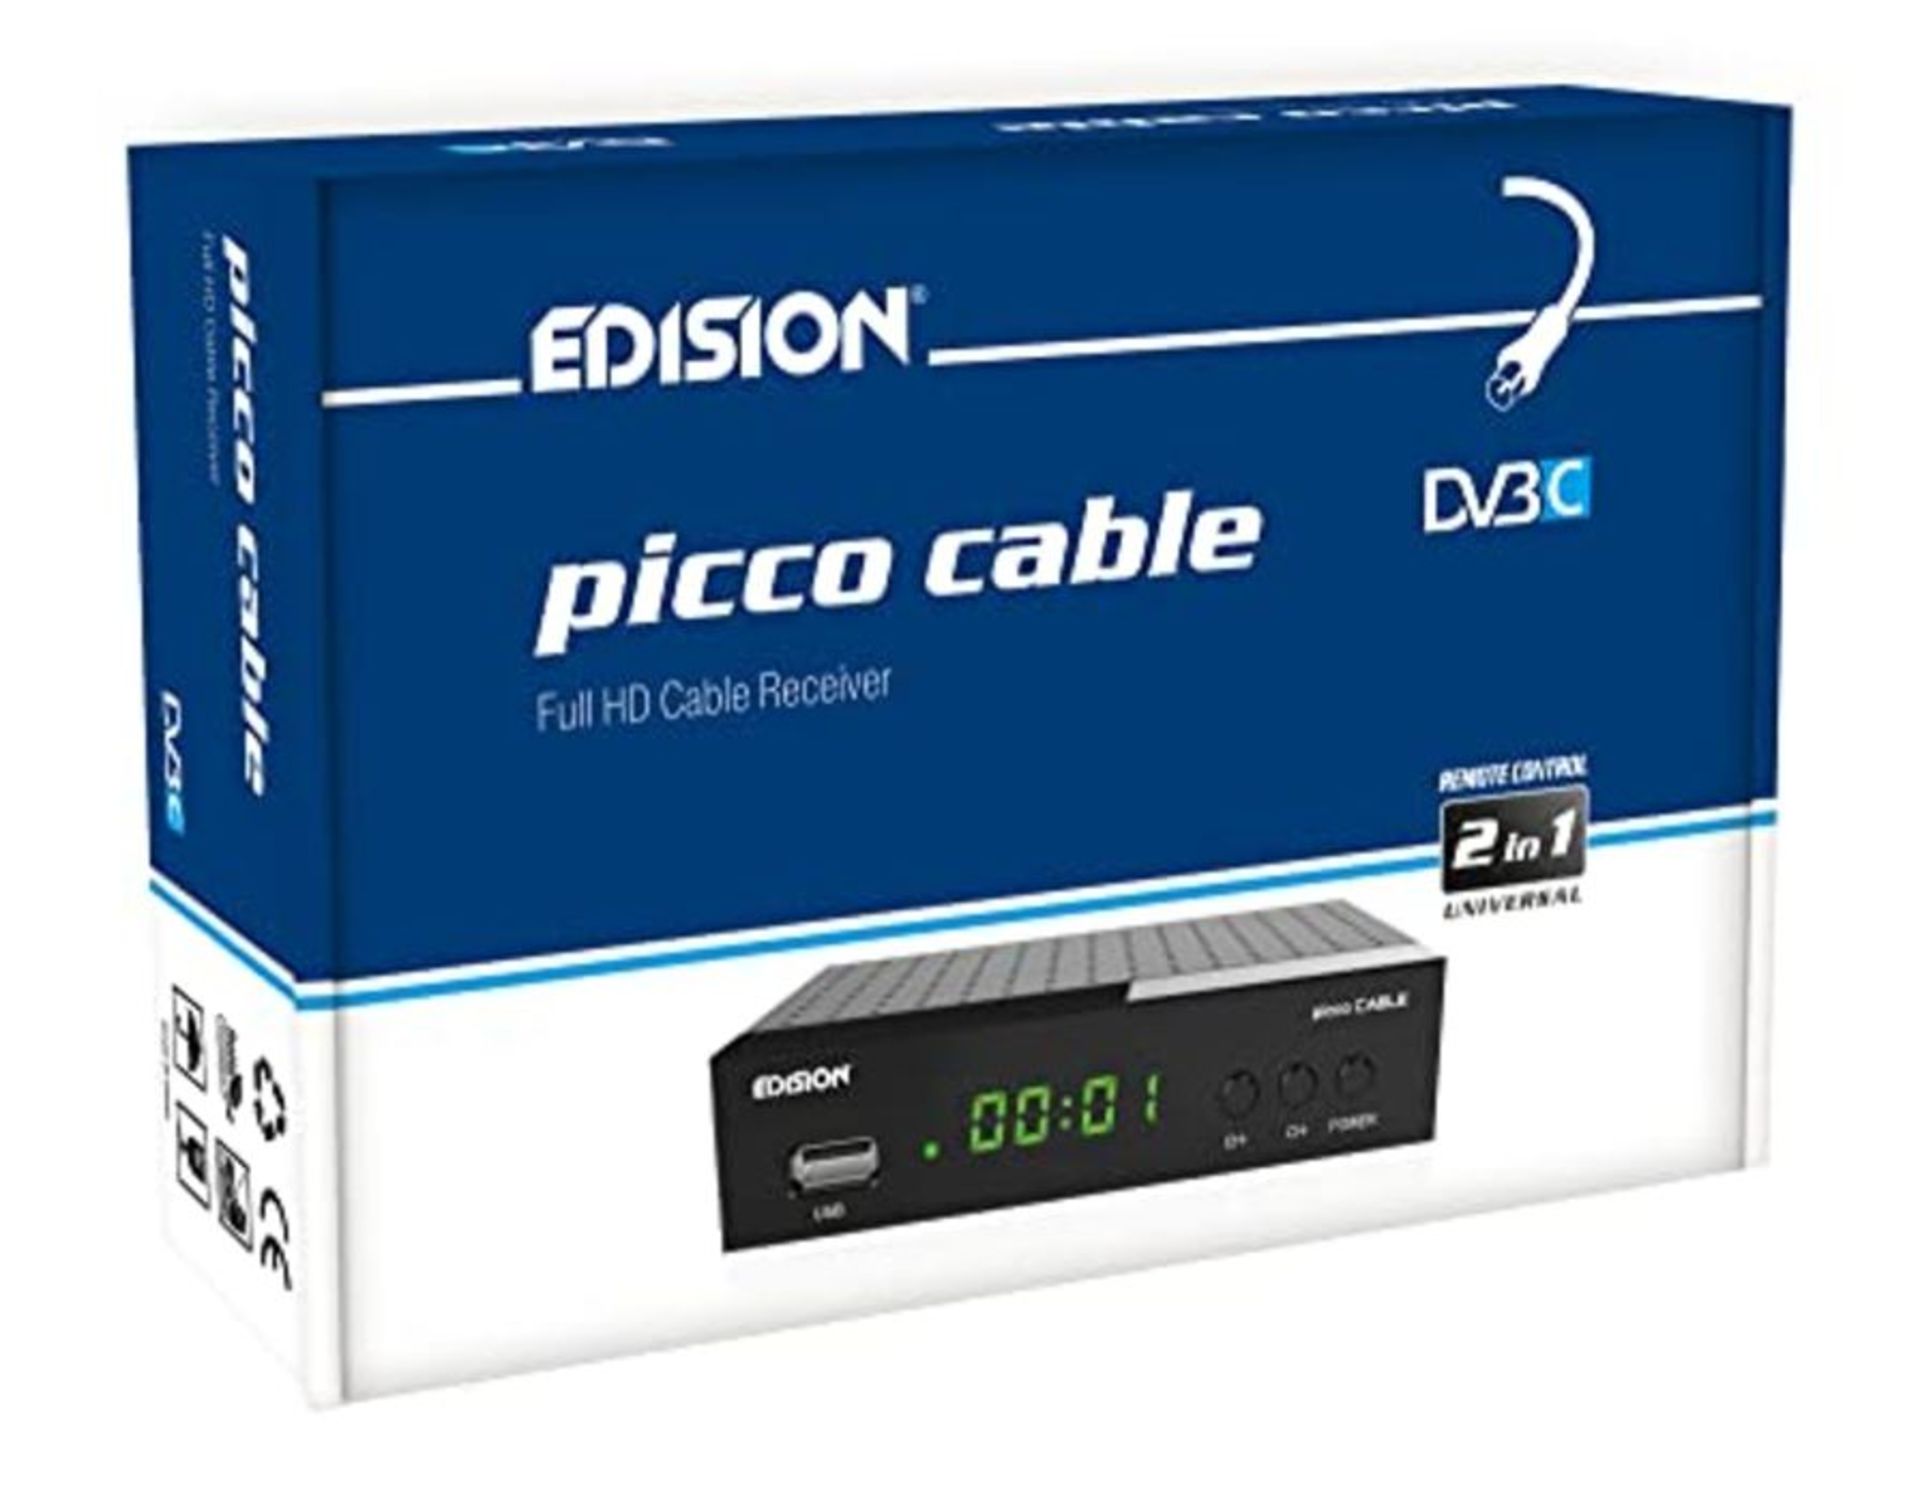 EDISION - Picco Cable Full HD Receiver, DVB-C, LAN, USB, HDMI, SCART, S/PDIF, IR Auge,